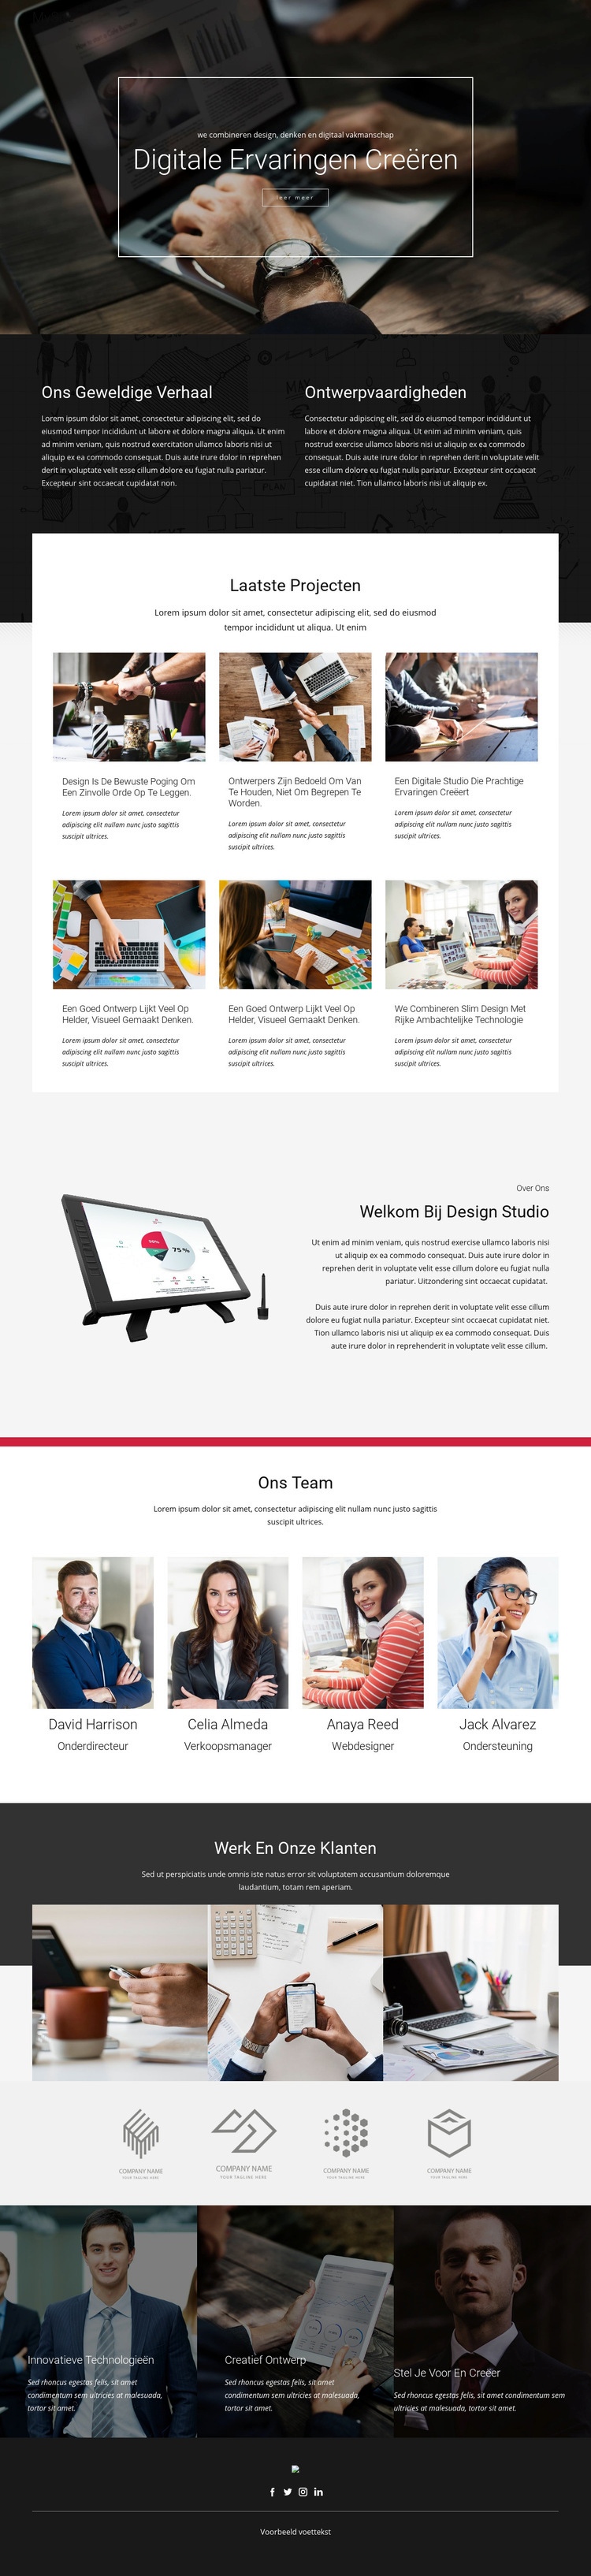 Crafting Digital Design Studio Website ontwerp